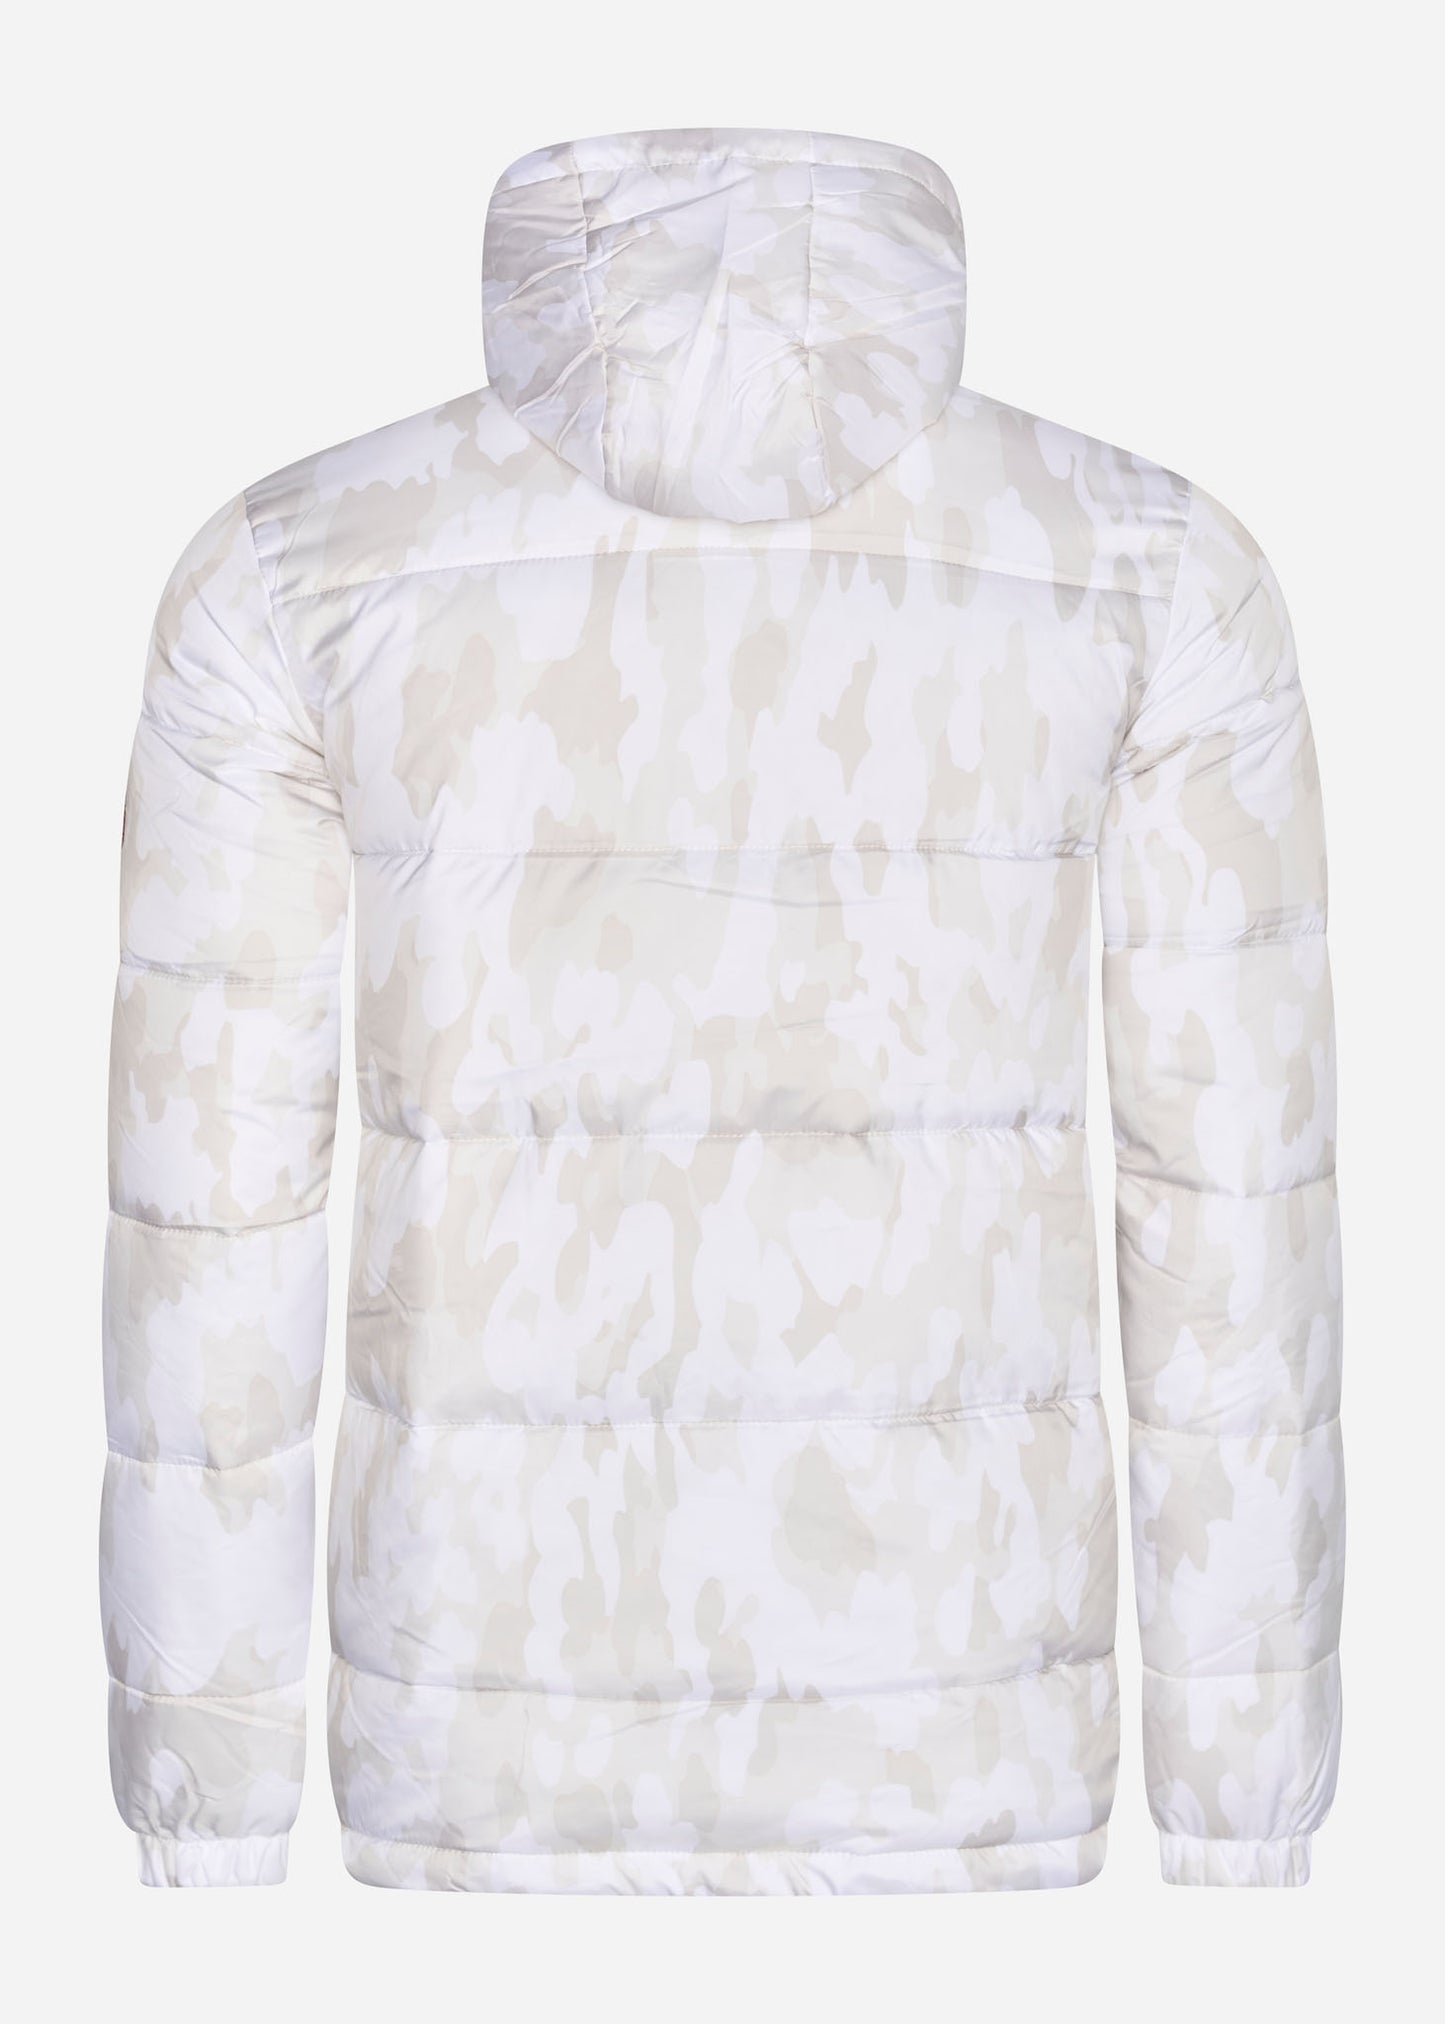 Leol padded jacket - off white